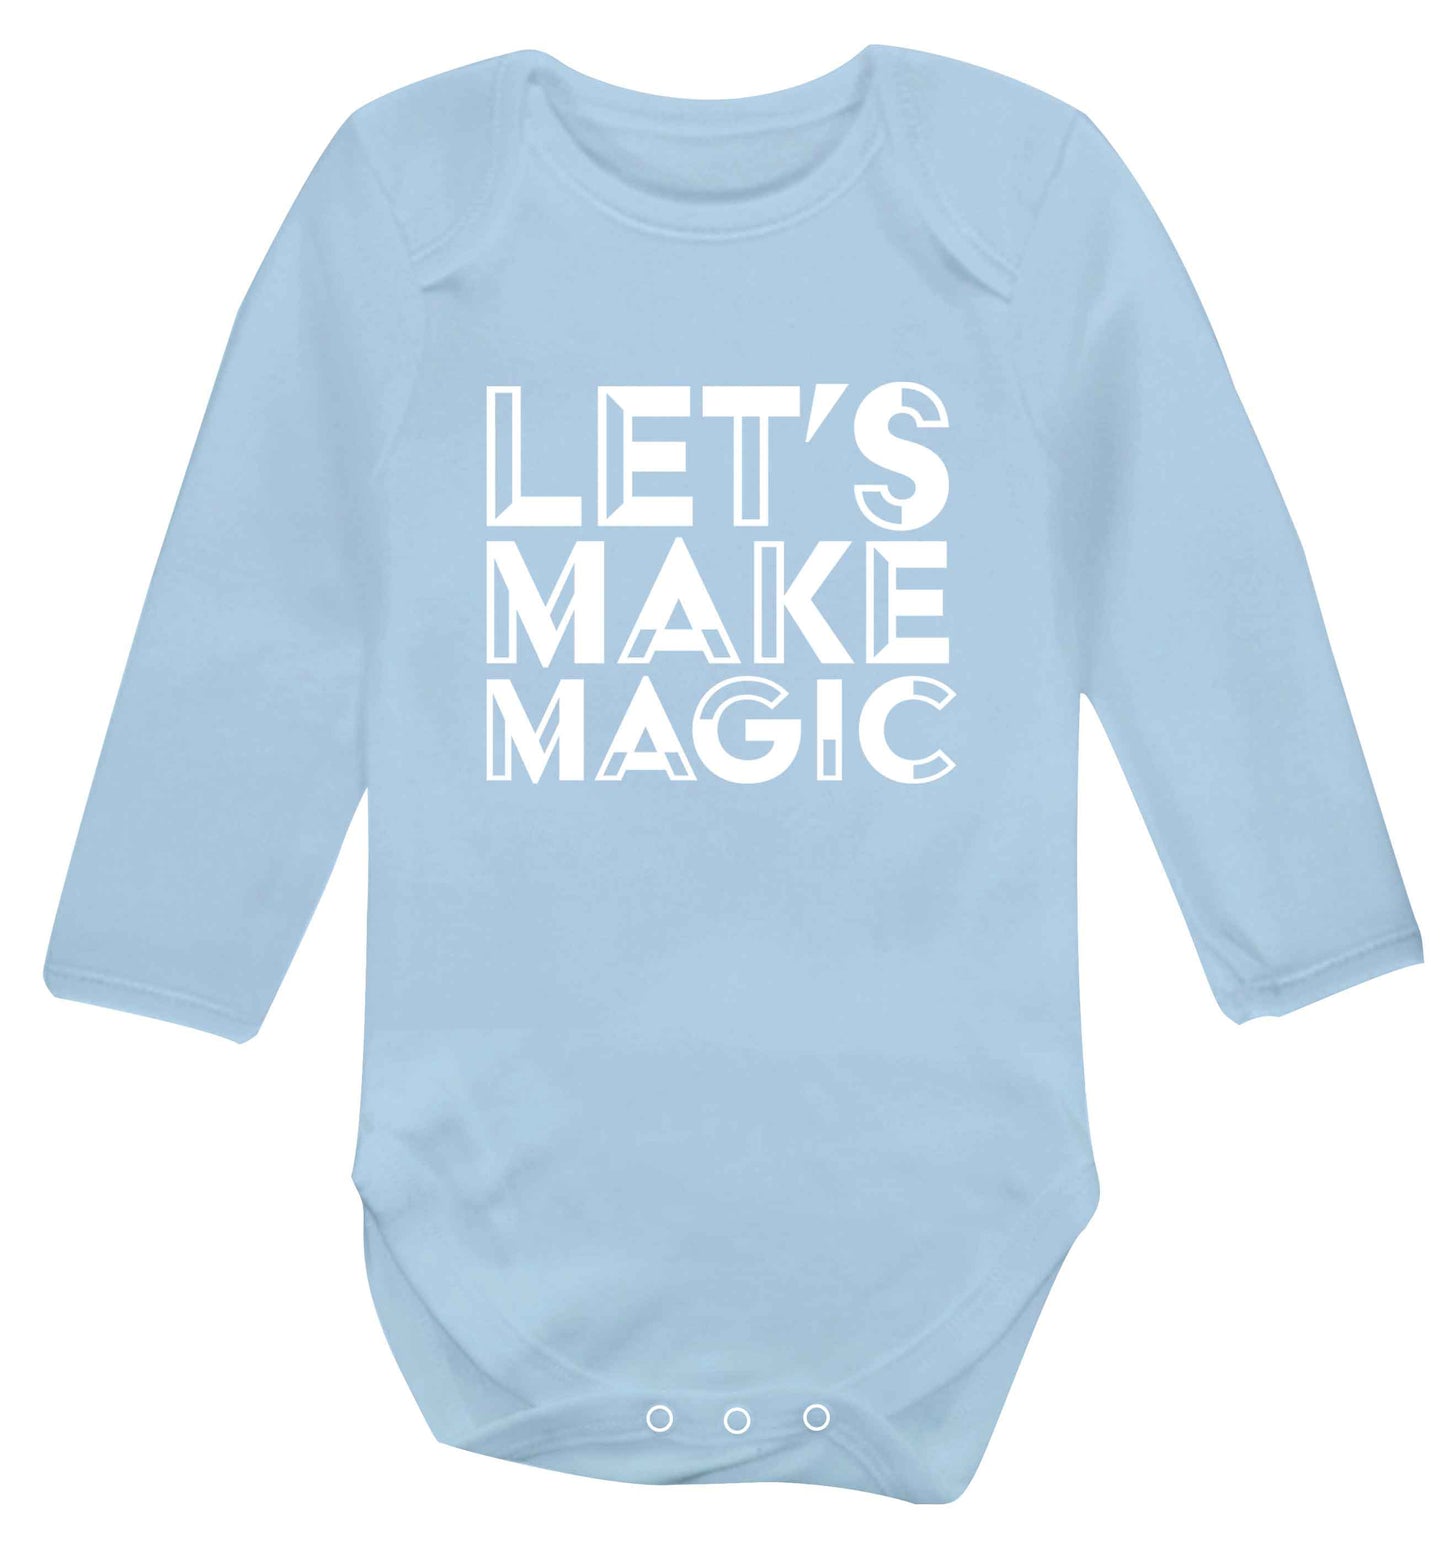 Let's make magic baby vest long sleeved pale blue 6-12 months